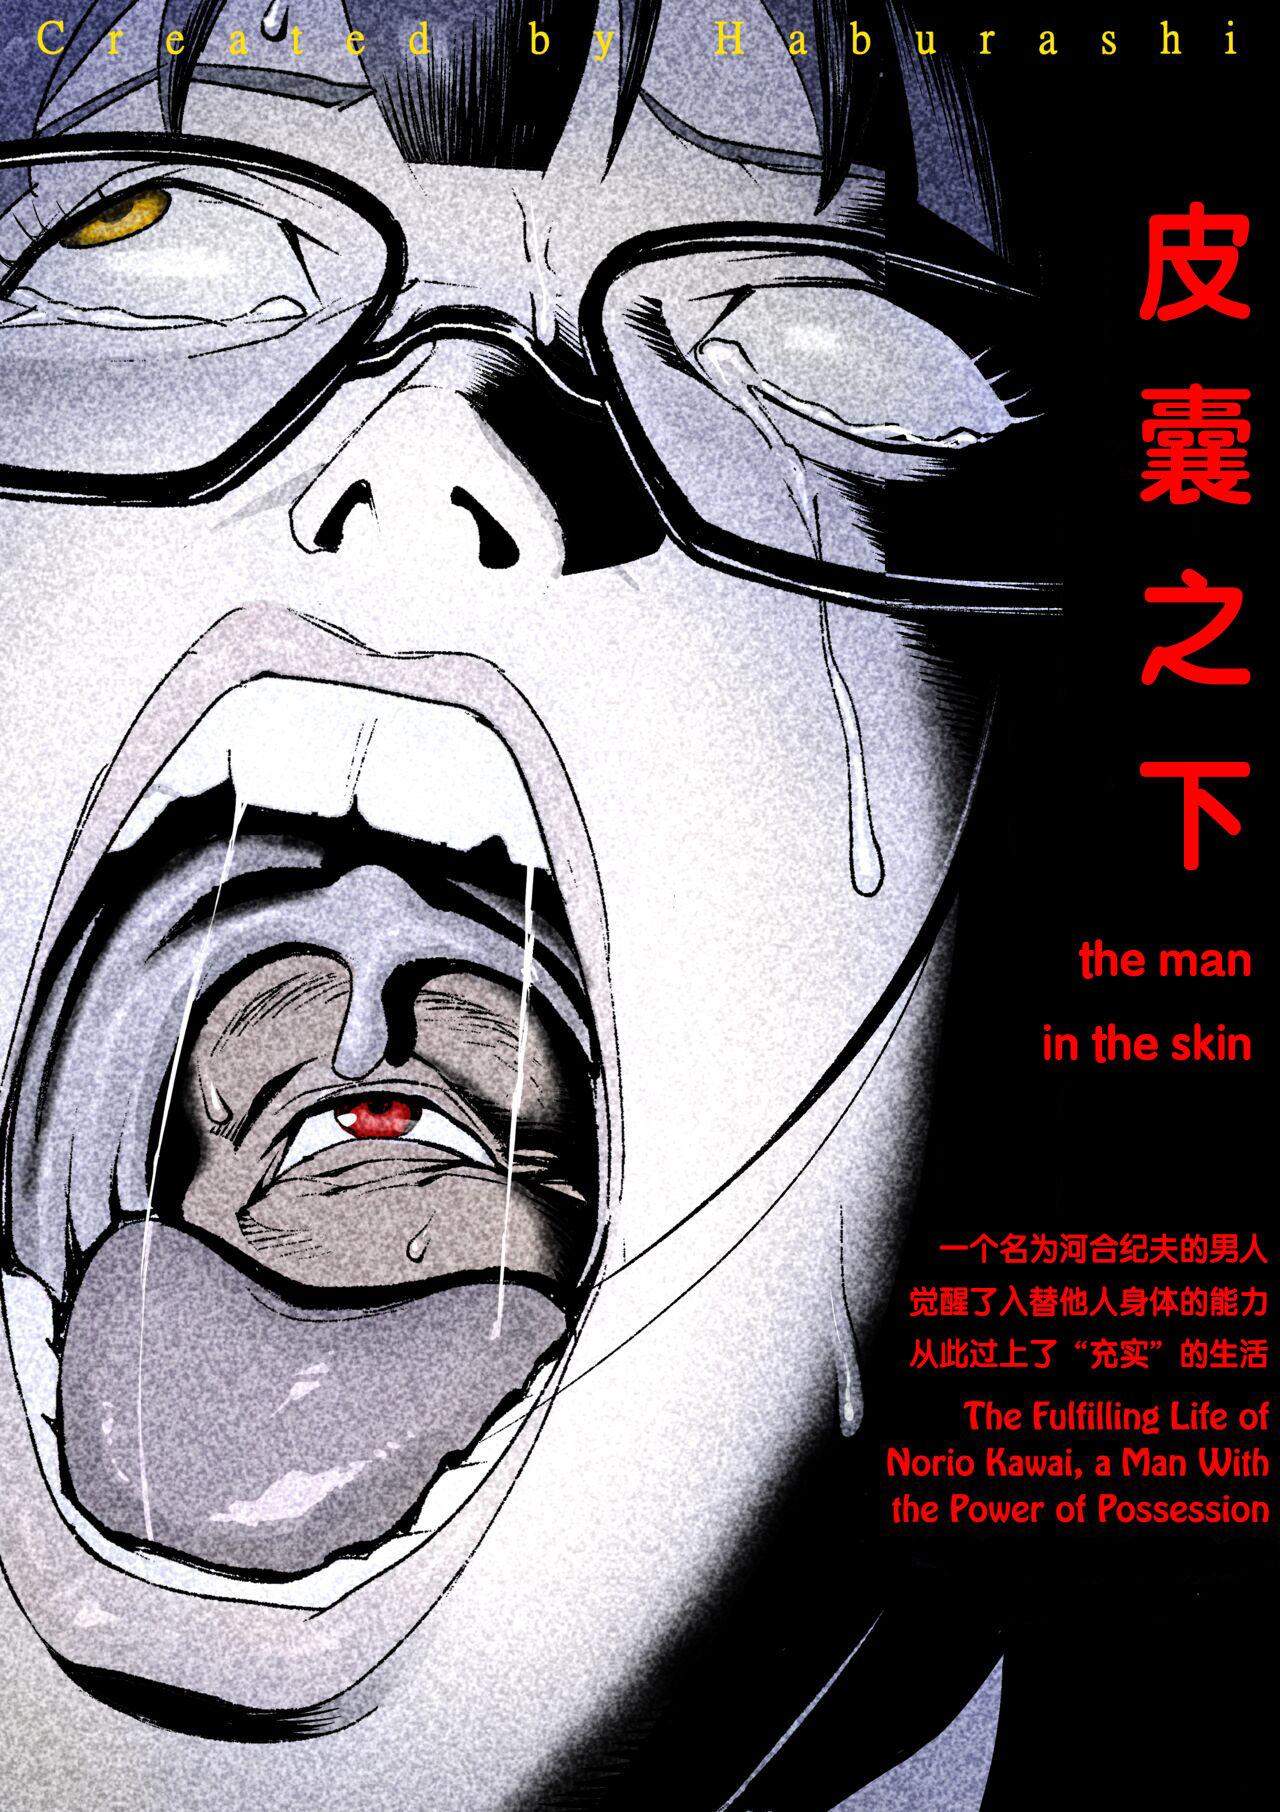 the man in the skin - awaken of the power of possession , Norio Kawai 's full life 0